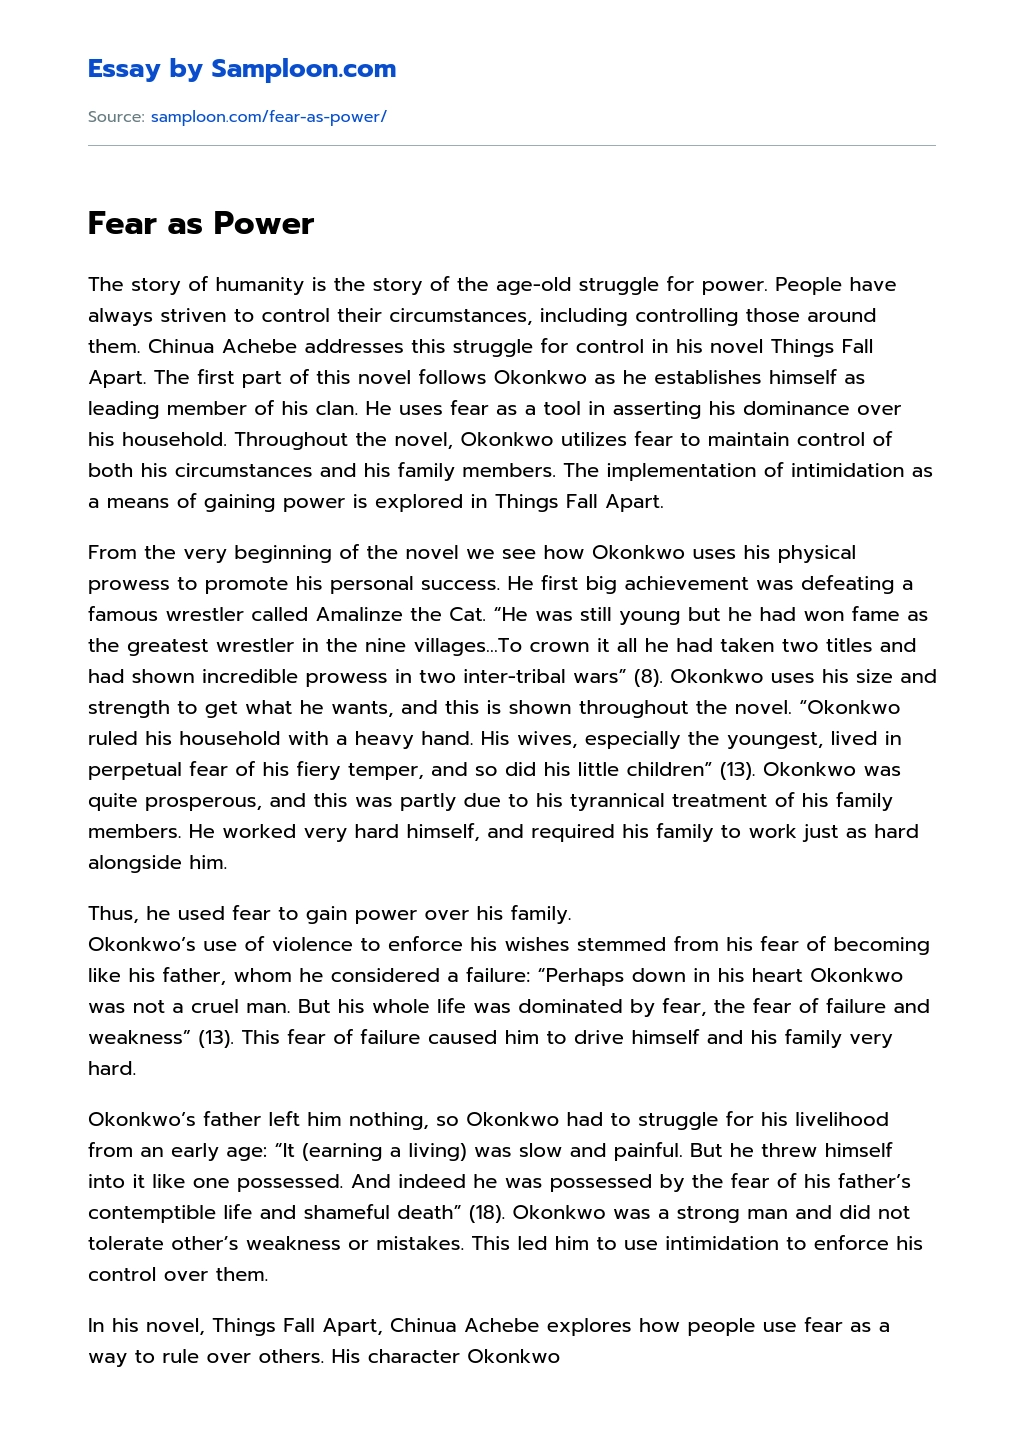 Fear as Power essay